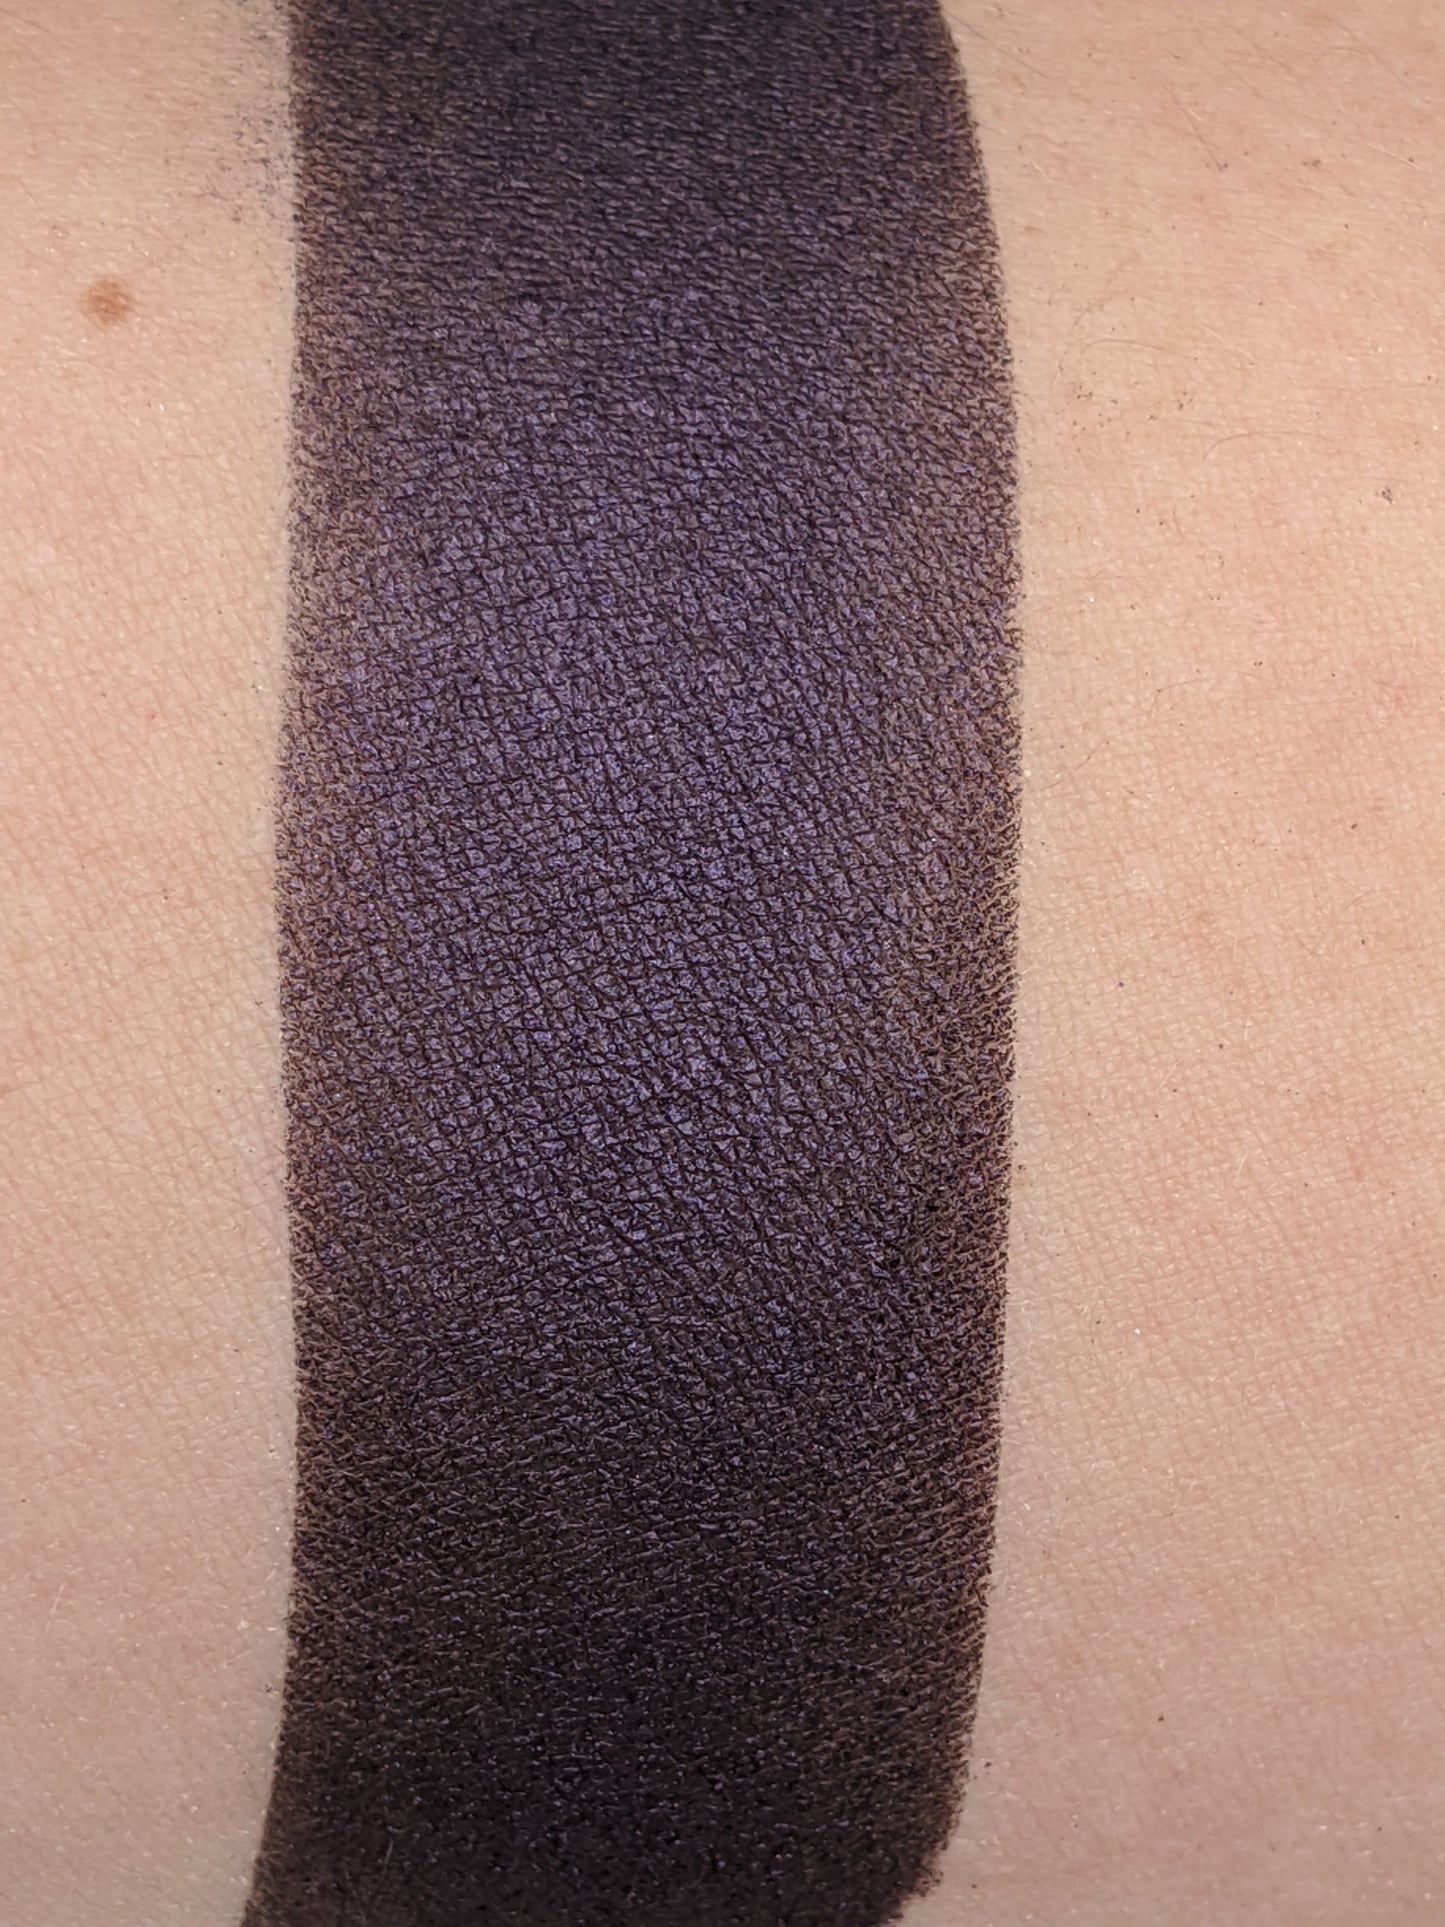 Plum - Eyeshadow Dark Purple